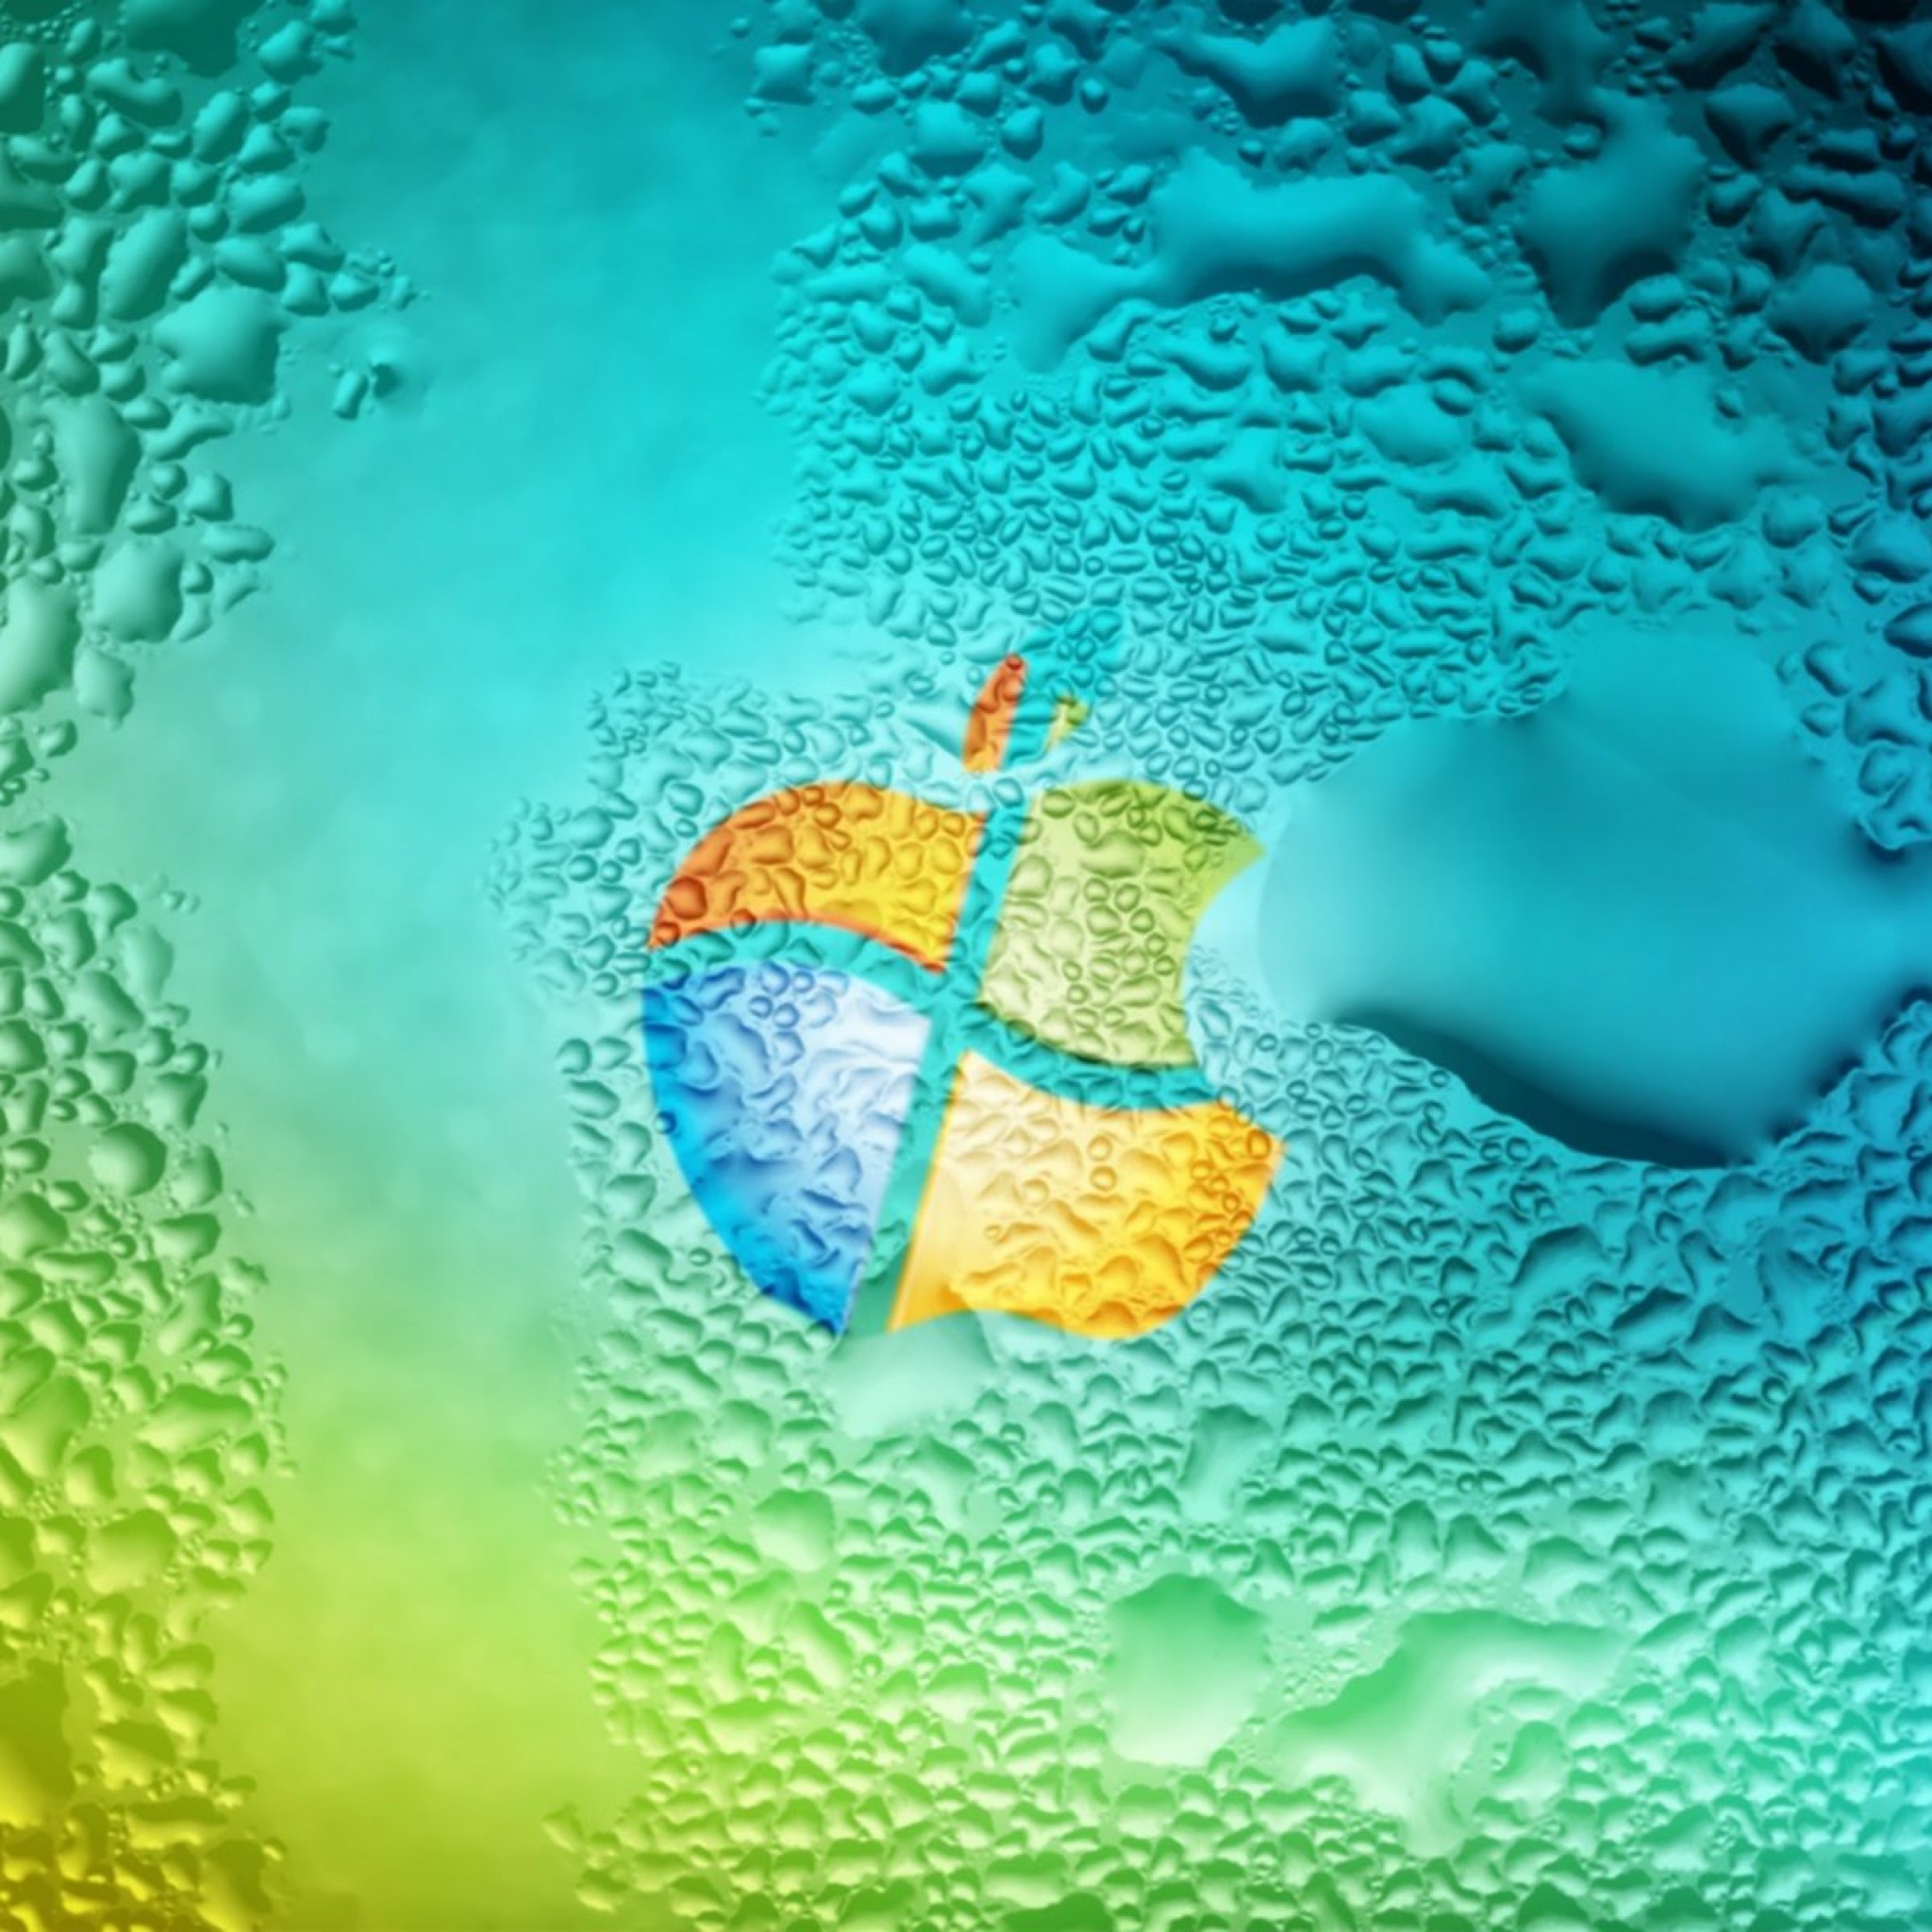 Apple Logo On Windows Xp Wallpaper Wallpapers Pic Ipad タブレット壁紙ギャラリー